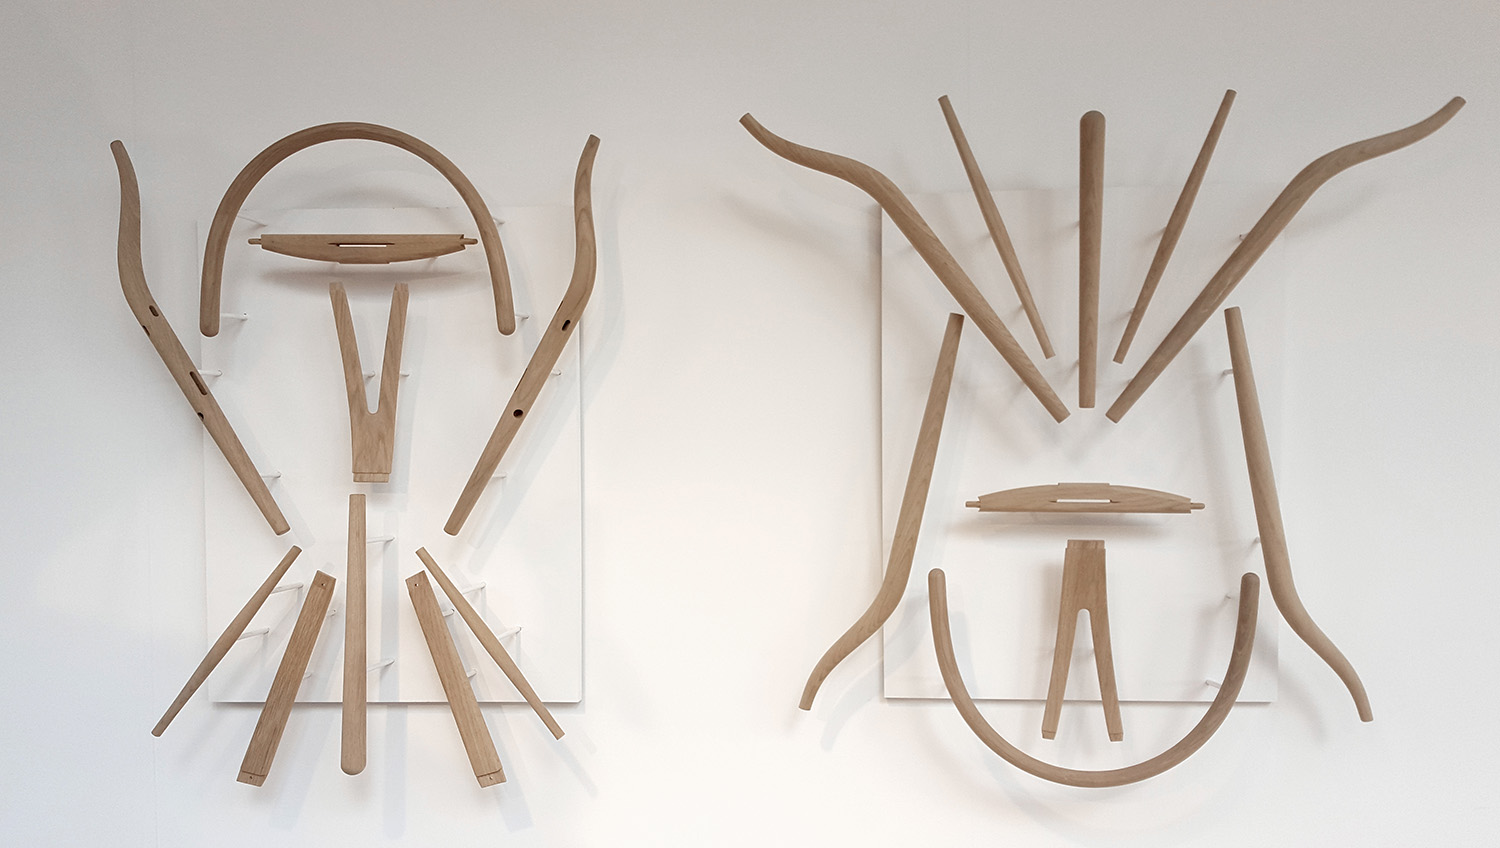 INTERIOR, Hans Wegner chair sculptures.